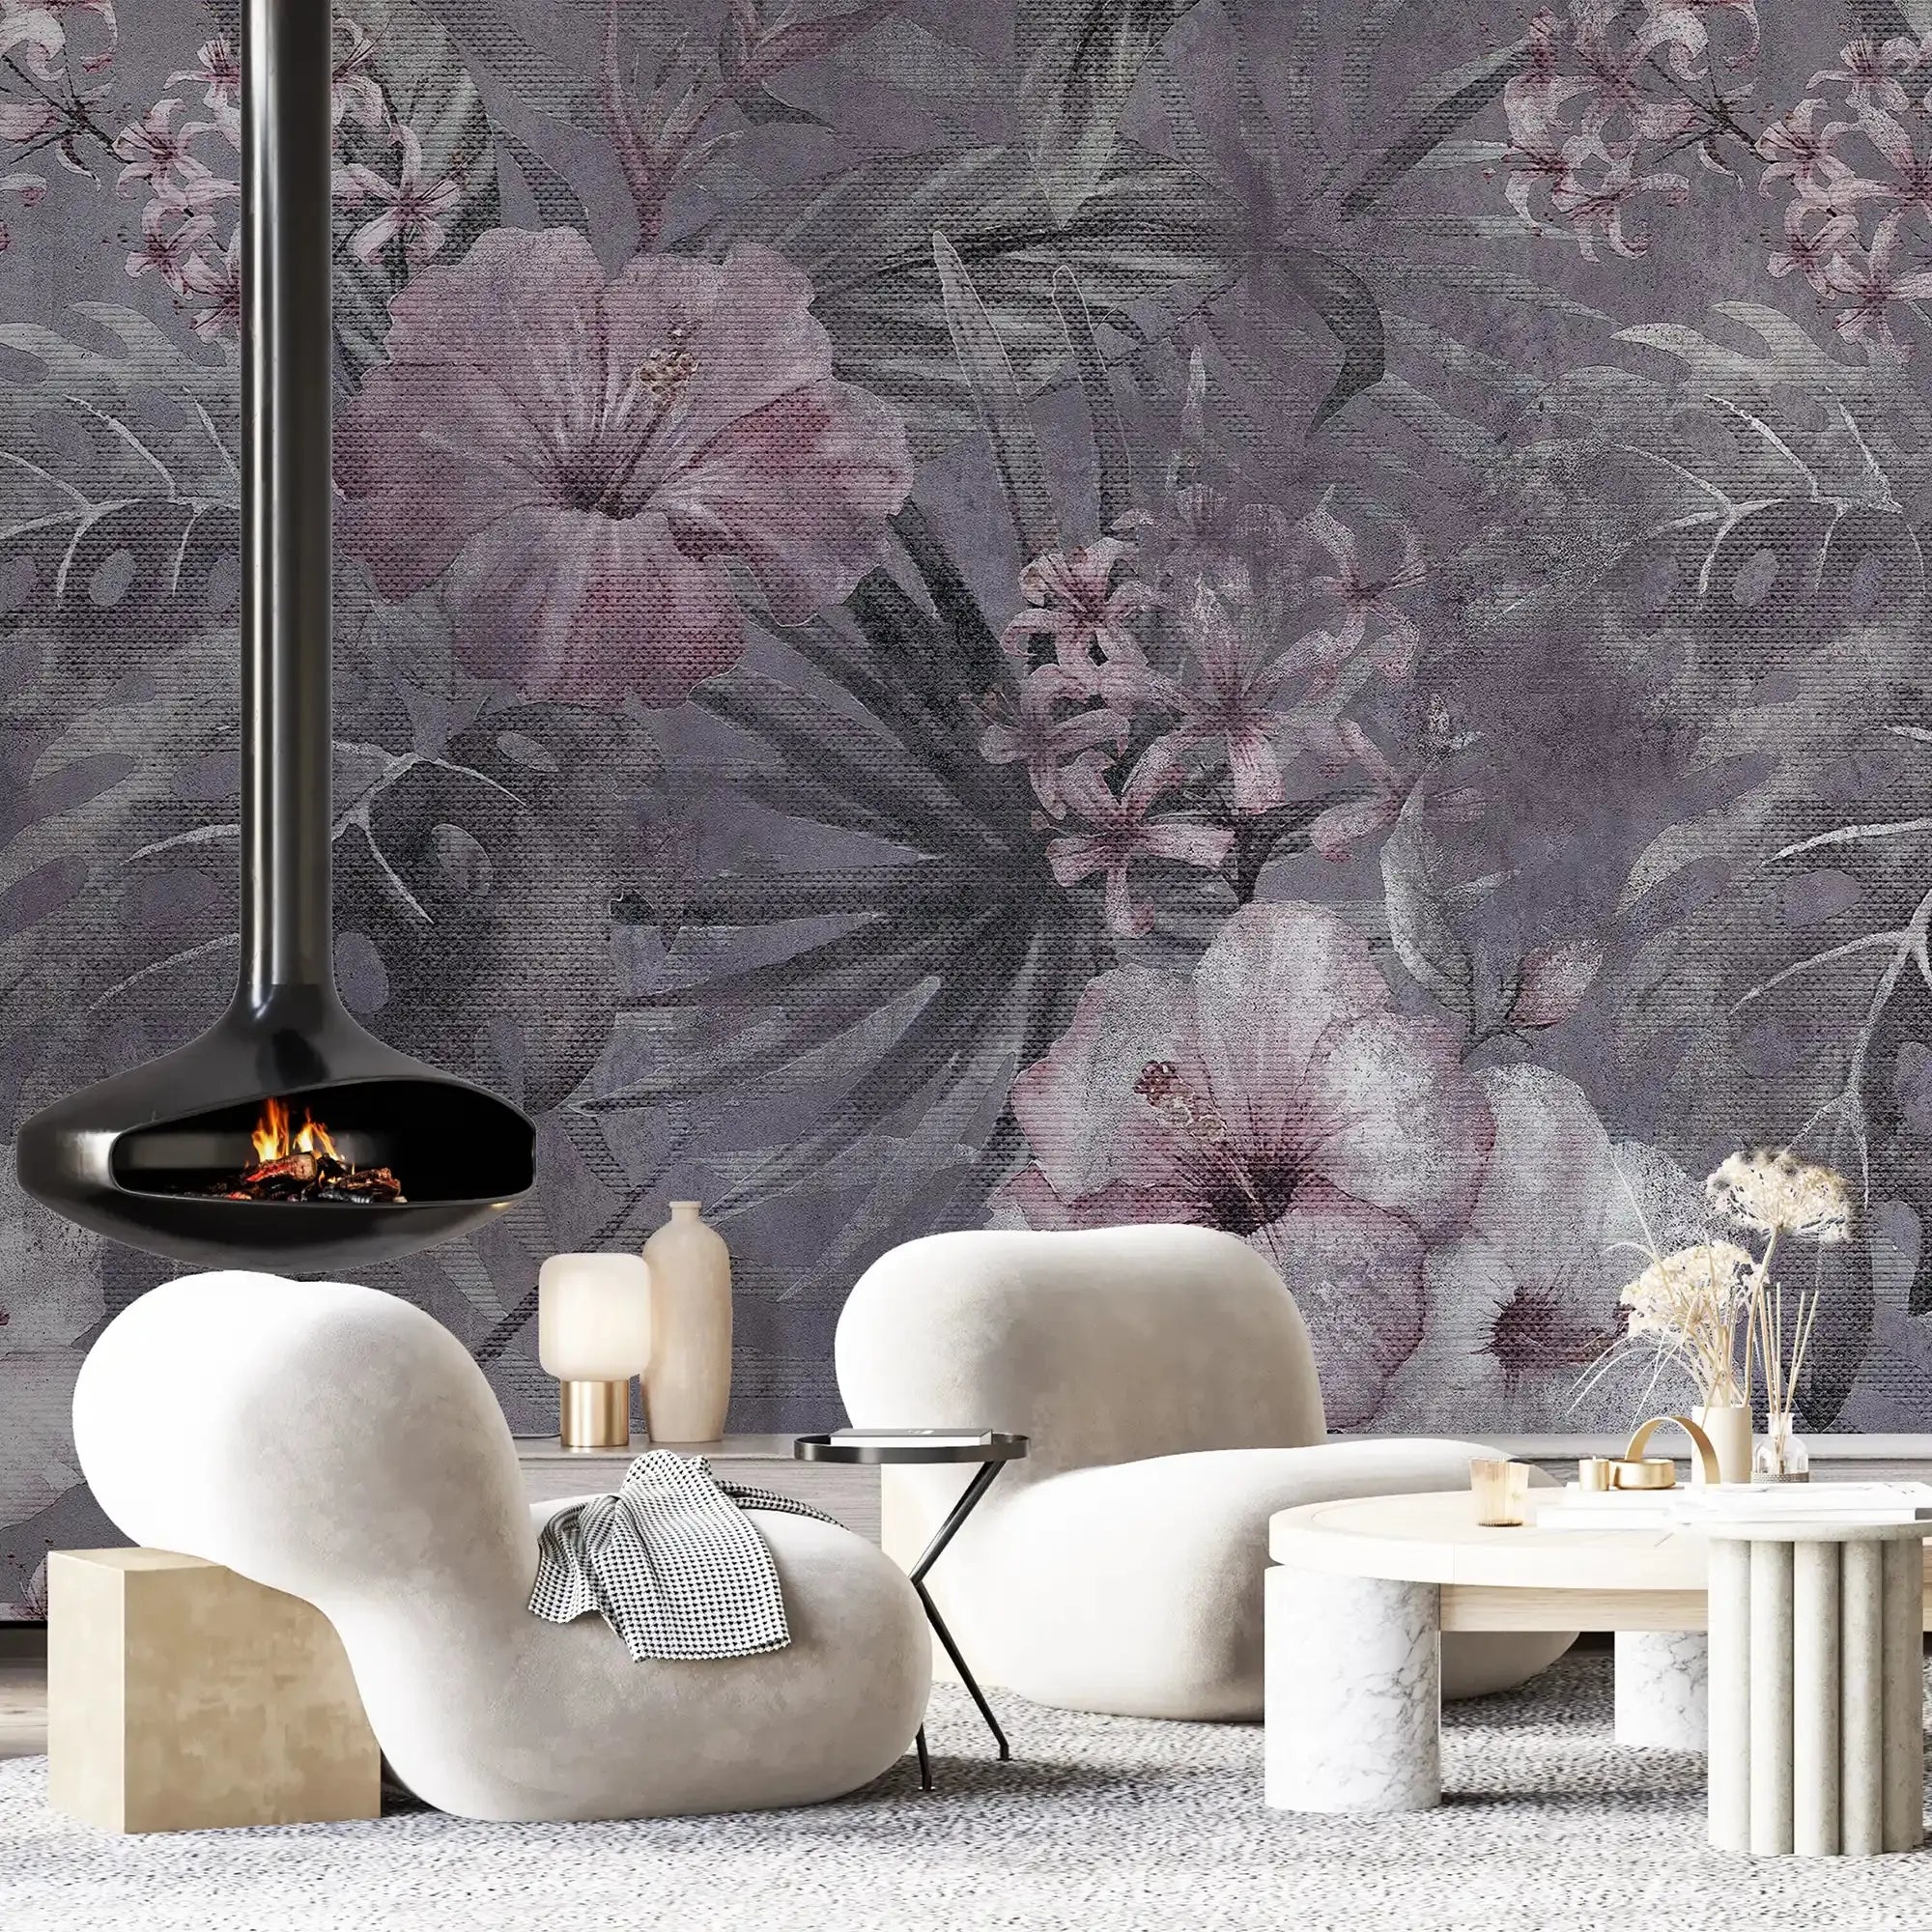 3081-B / Vibrant Floral Peelable Stickable Wallpaper - Transform Your Living Room with Easy Install Art Deco Design - Artevella